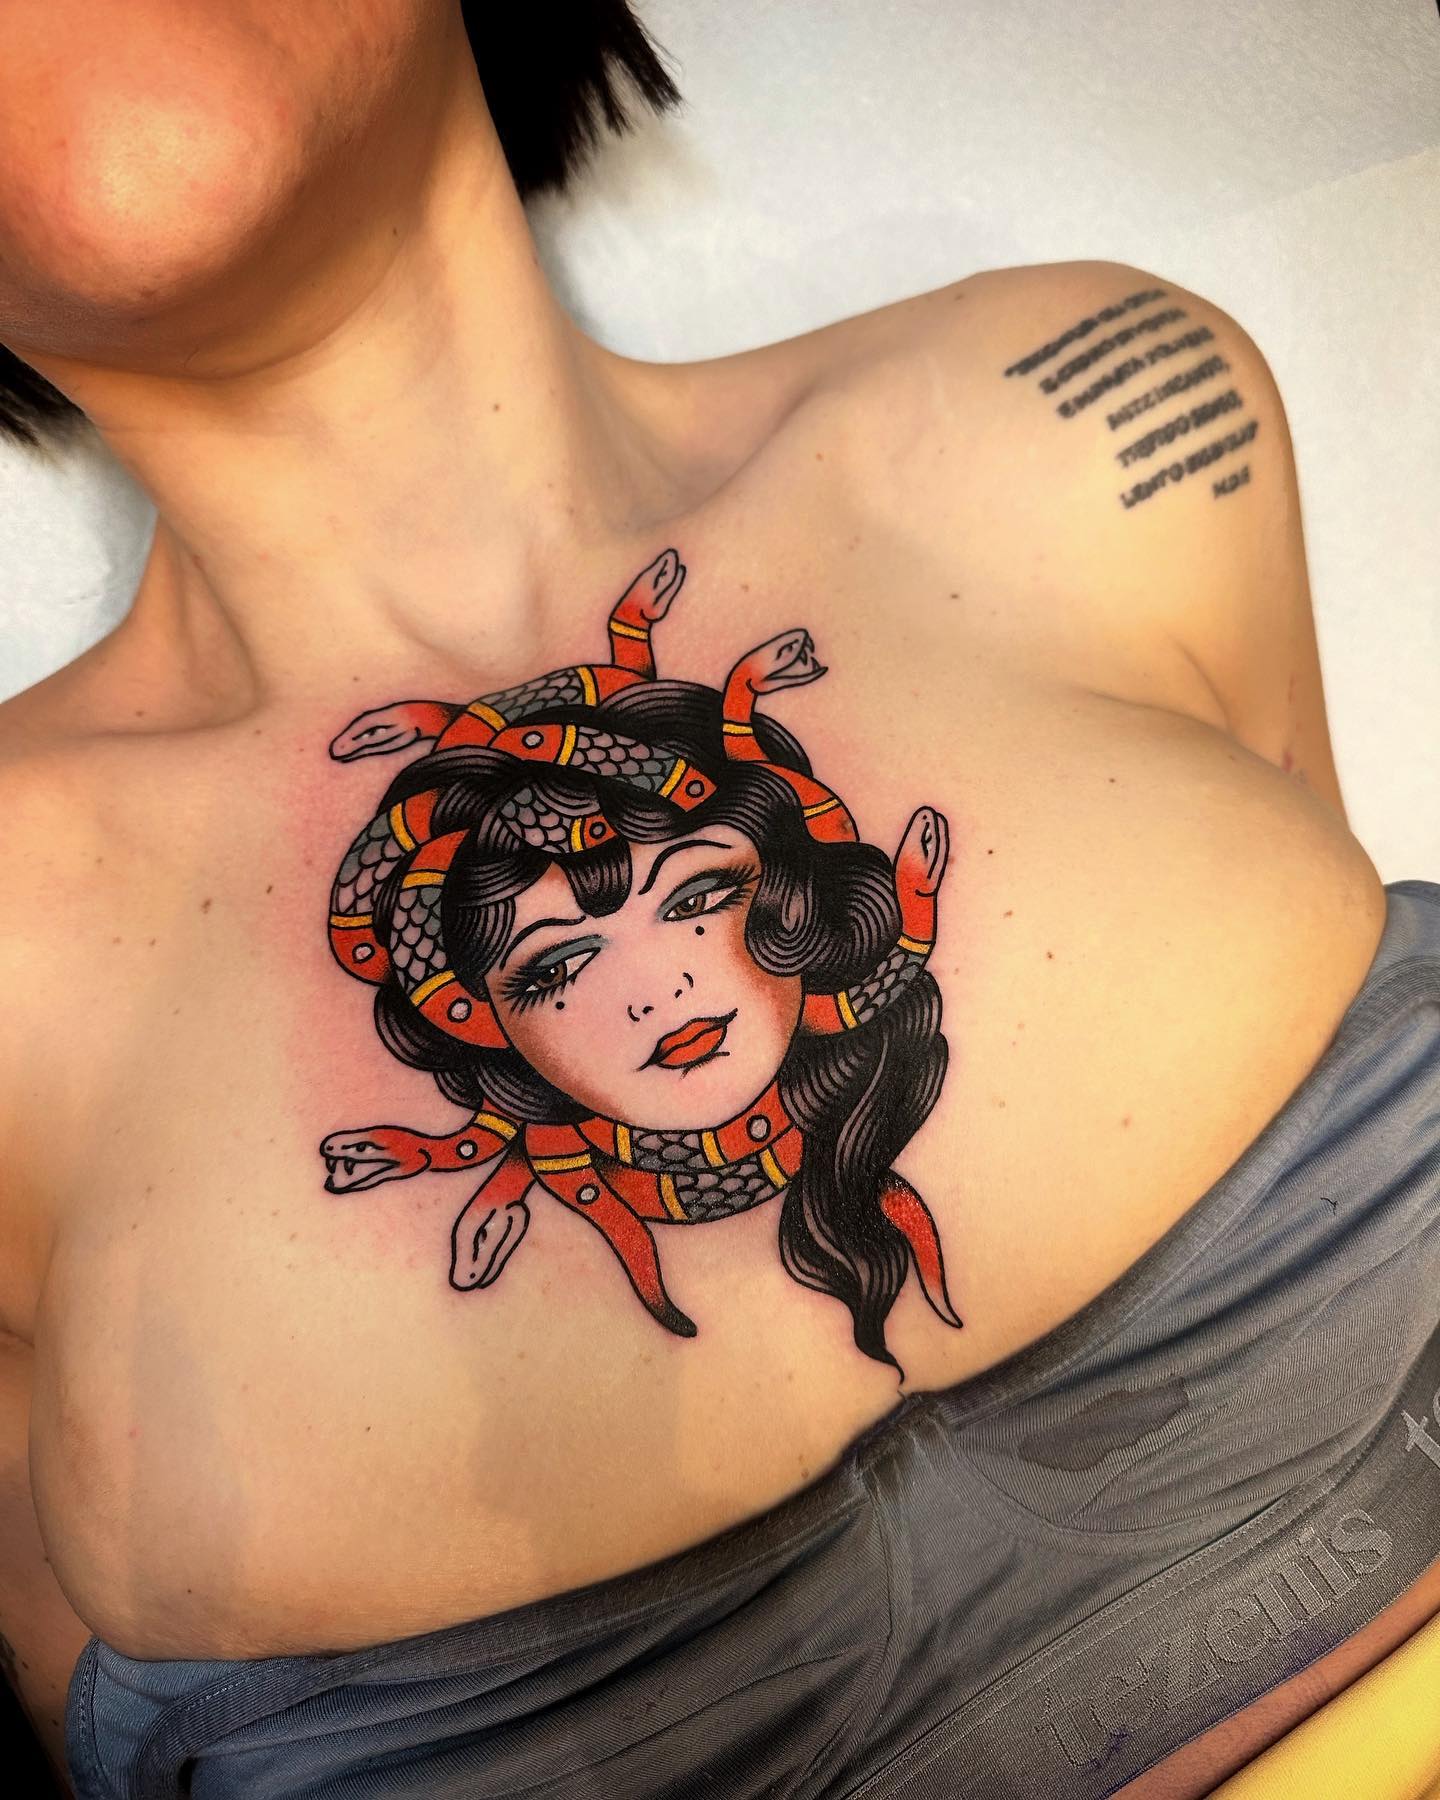 Colorful Medusa Tattoo on Chest